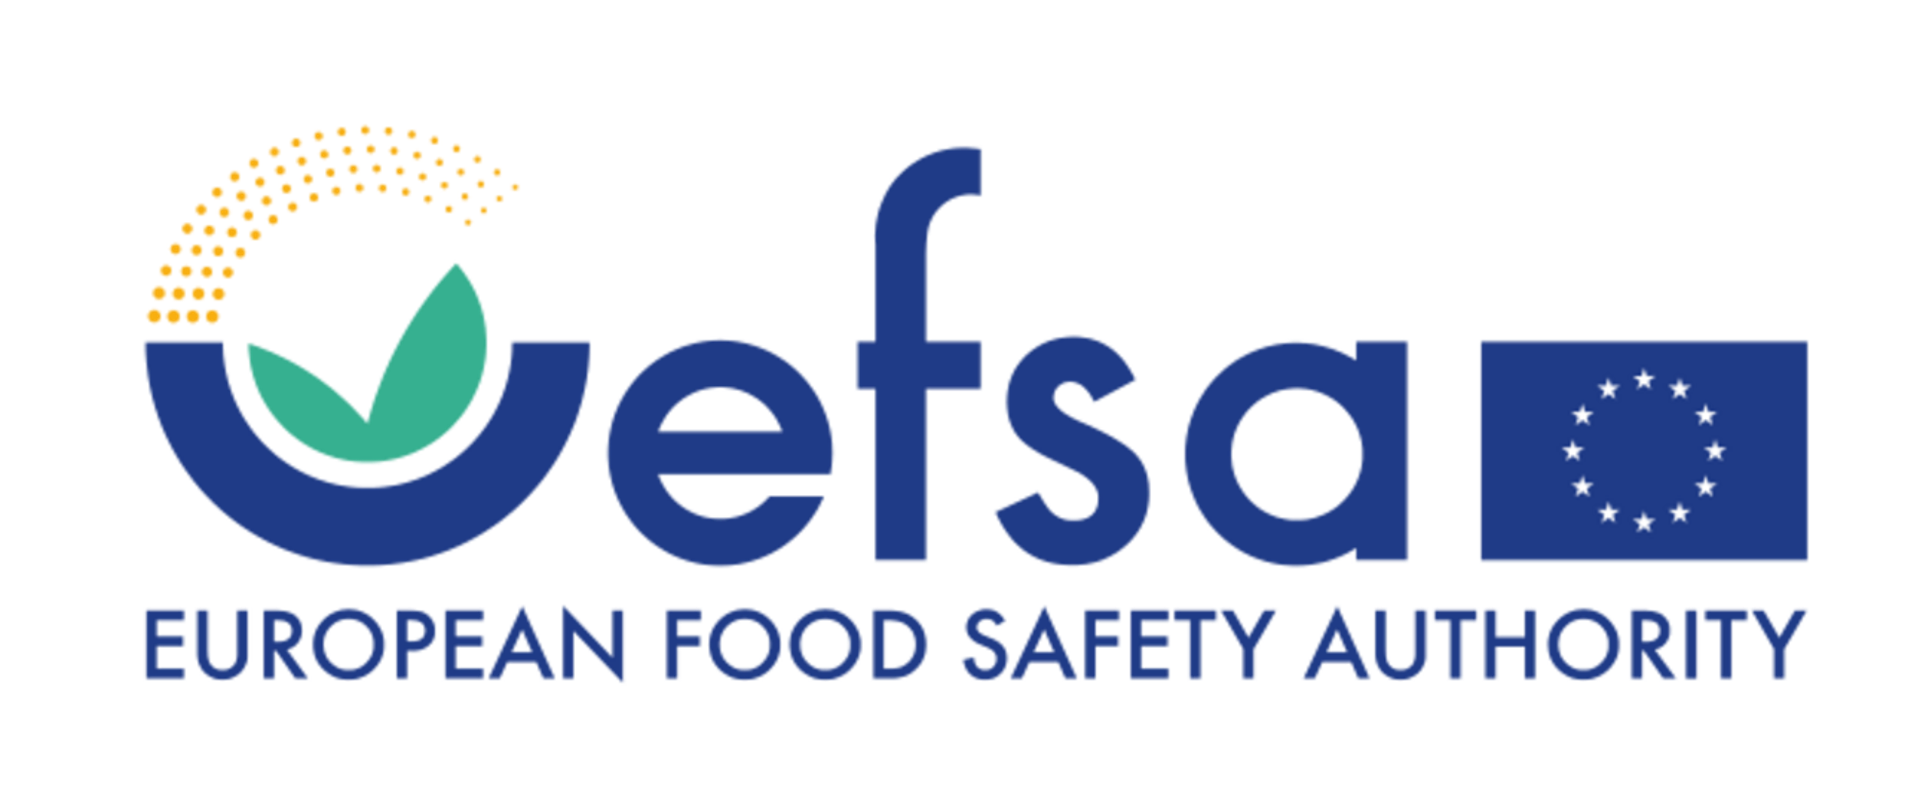 Logo EFSA: European Food Safety Authority